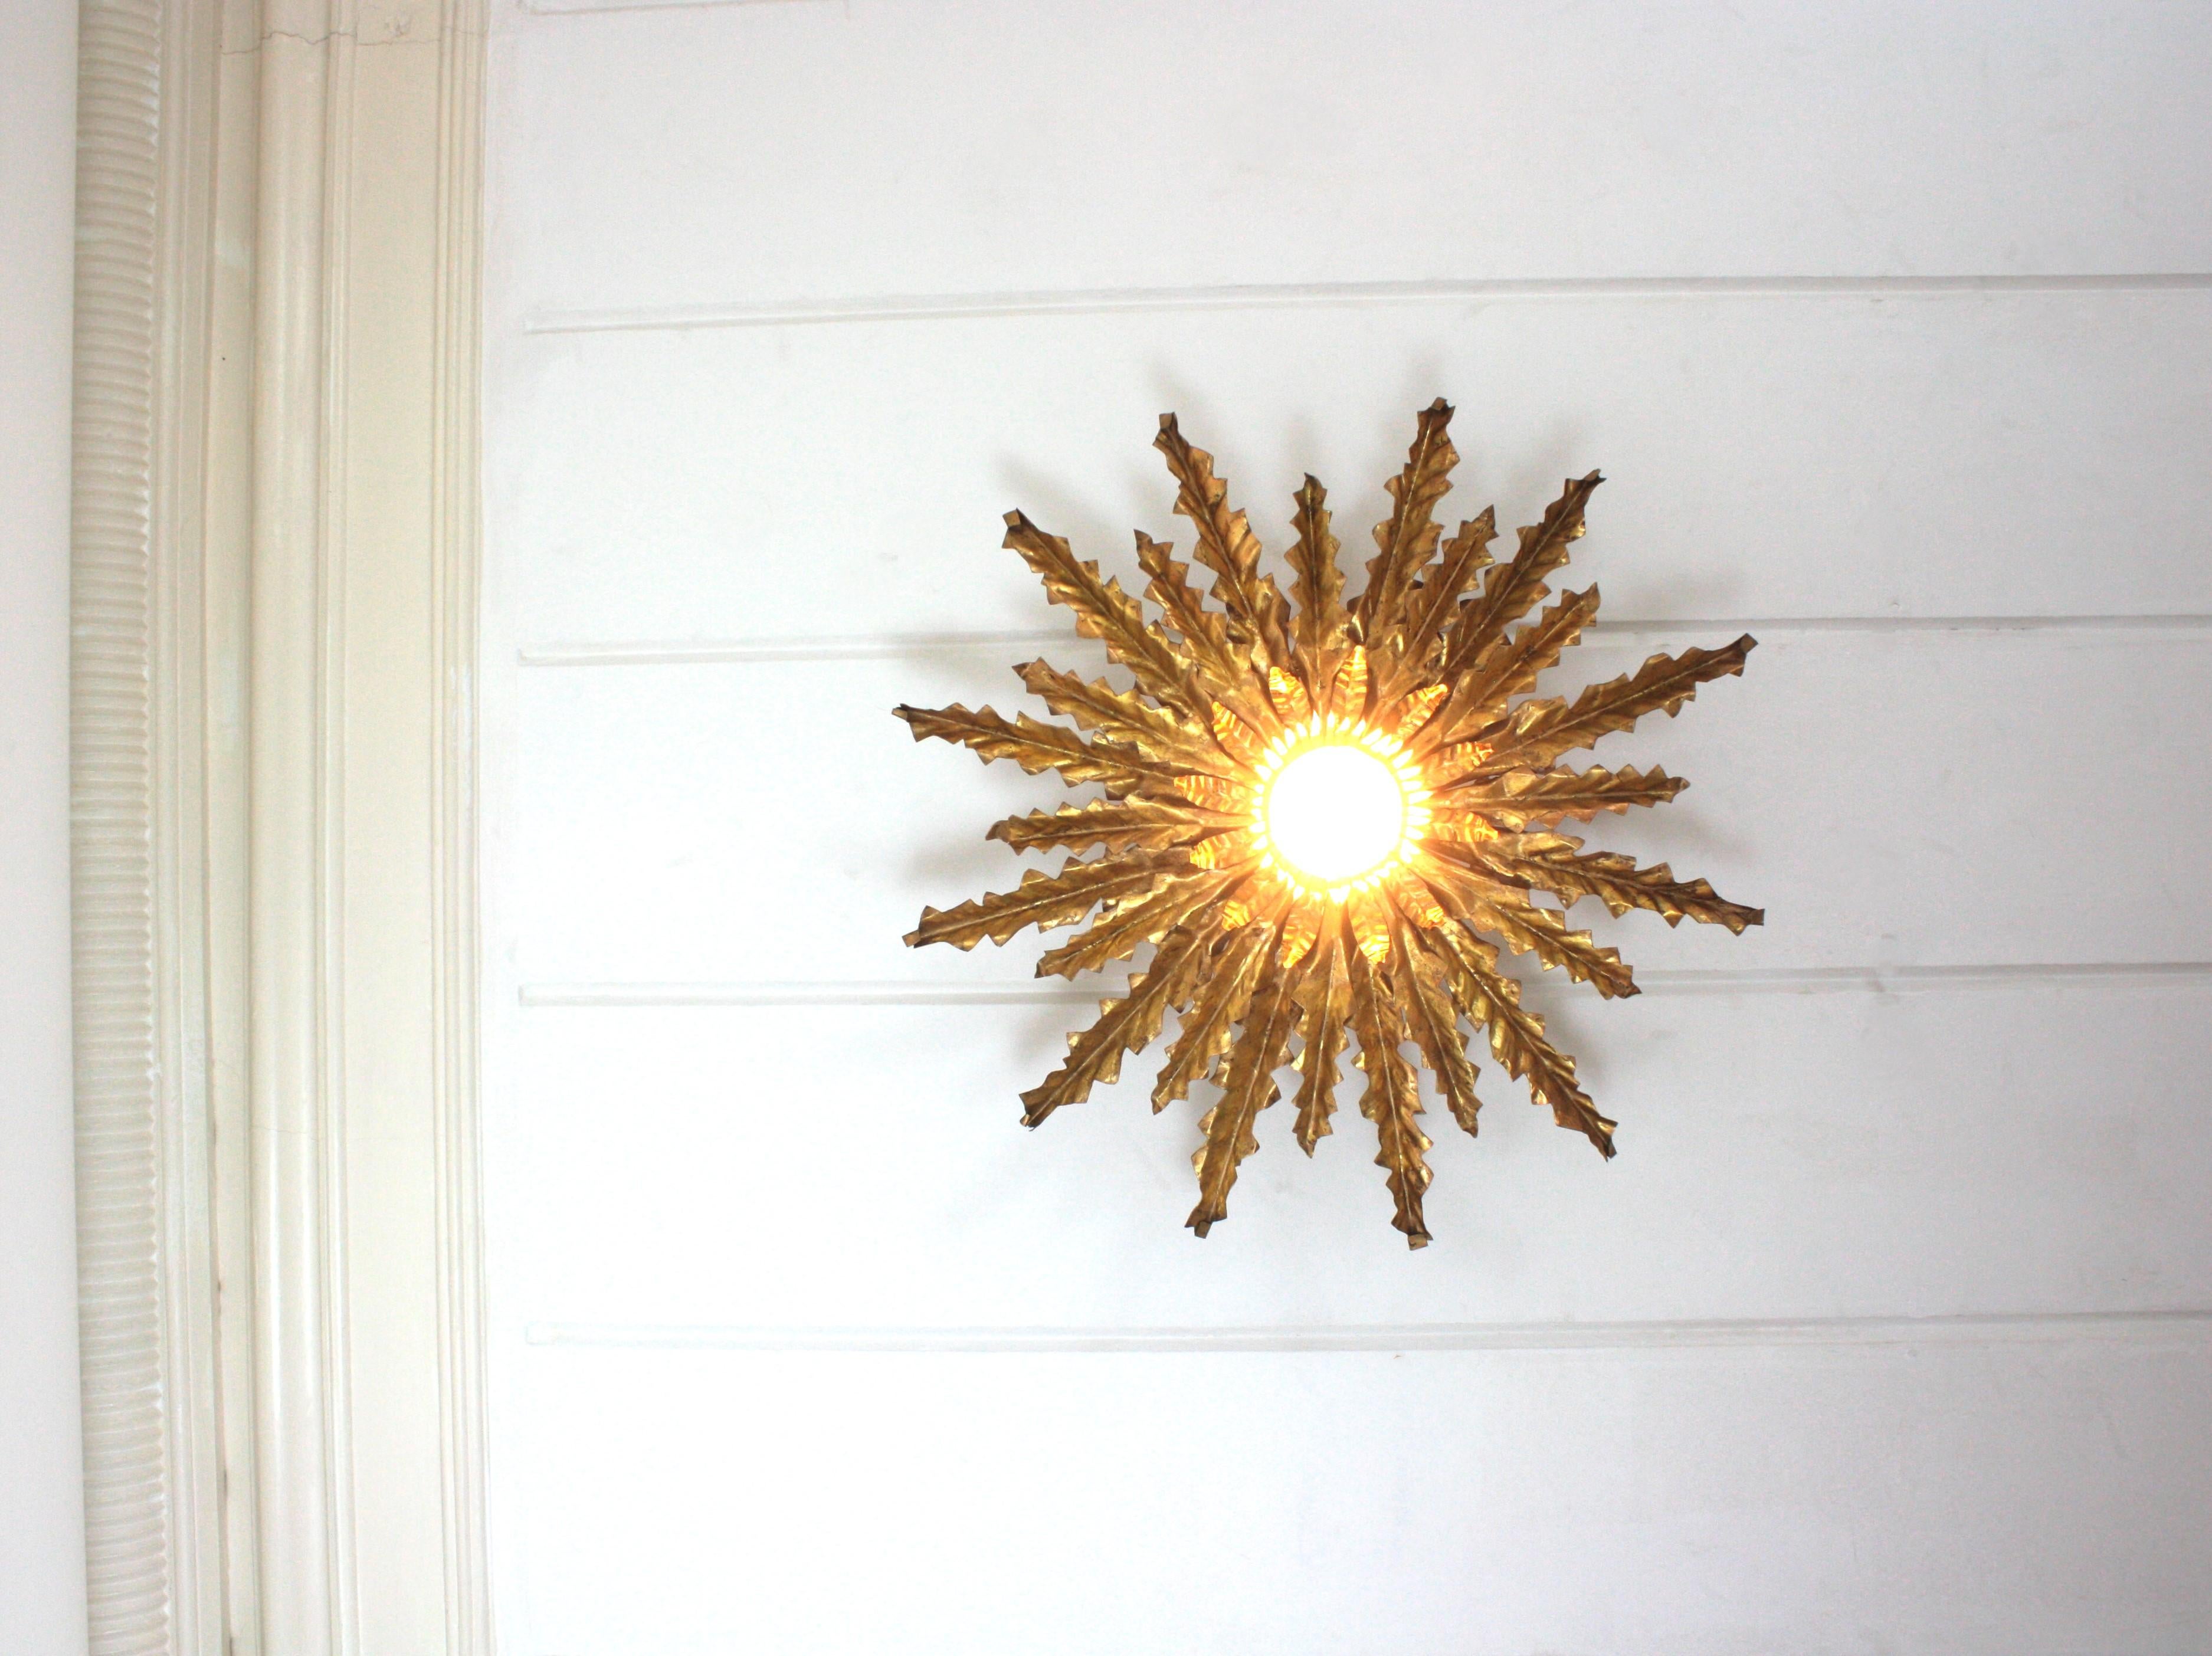 Spanish Sunburst Leafed Ceiling Light Fixture or Pendant, Gilt Iron For Sale 9